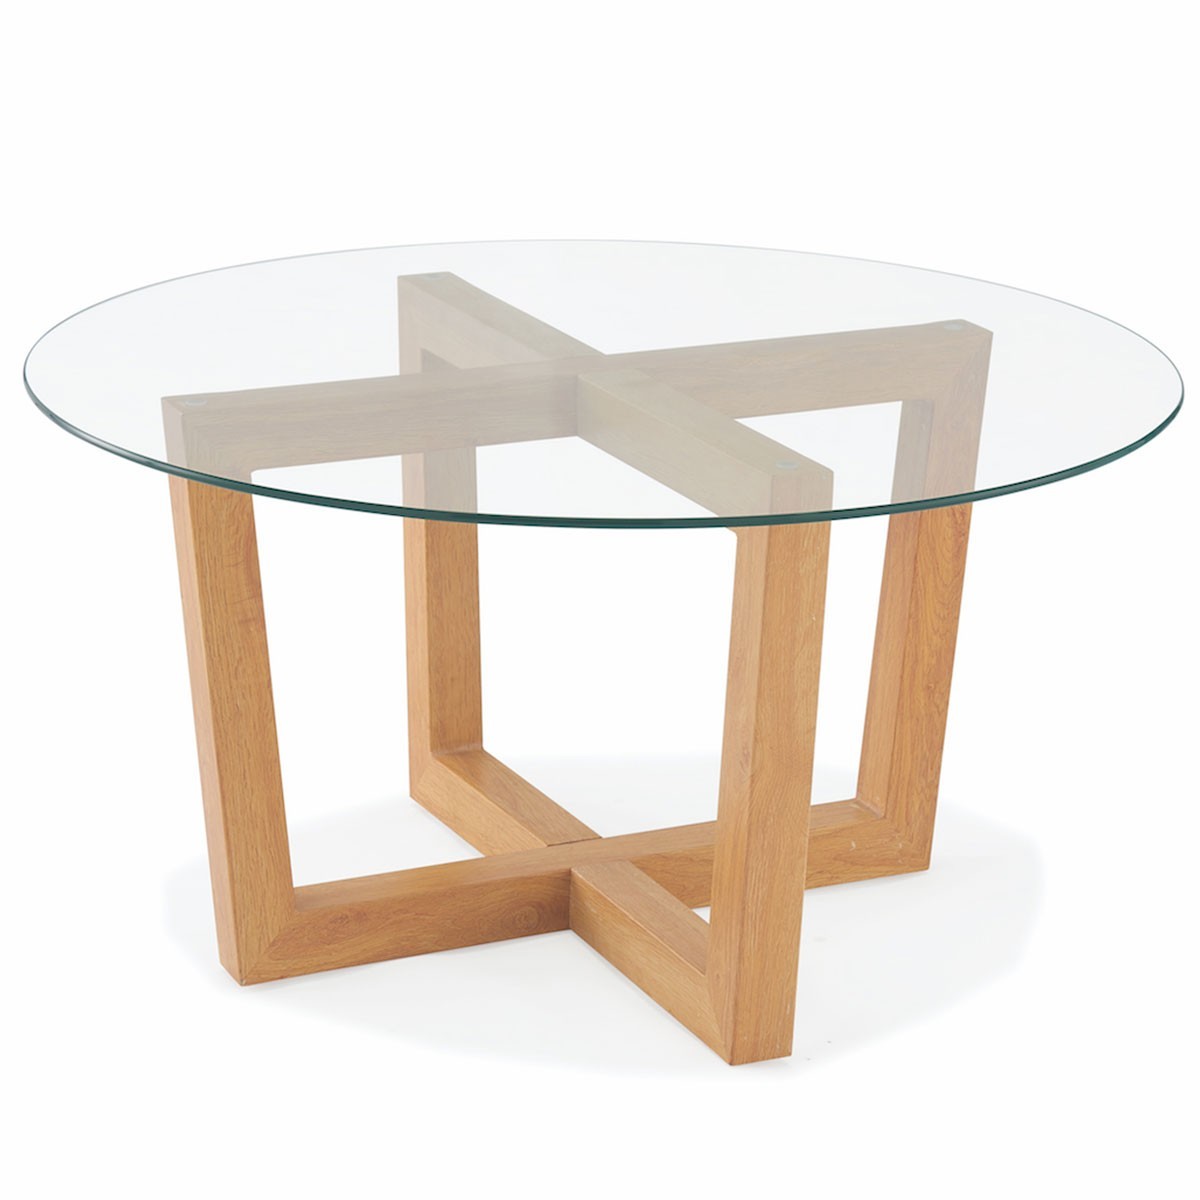 La table basse ronde en bois tania